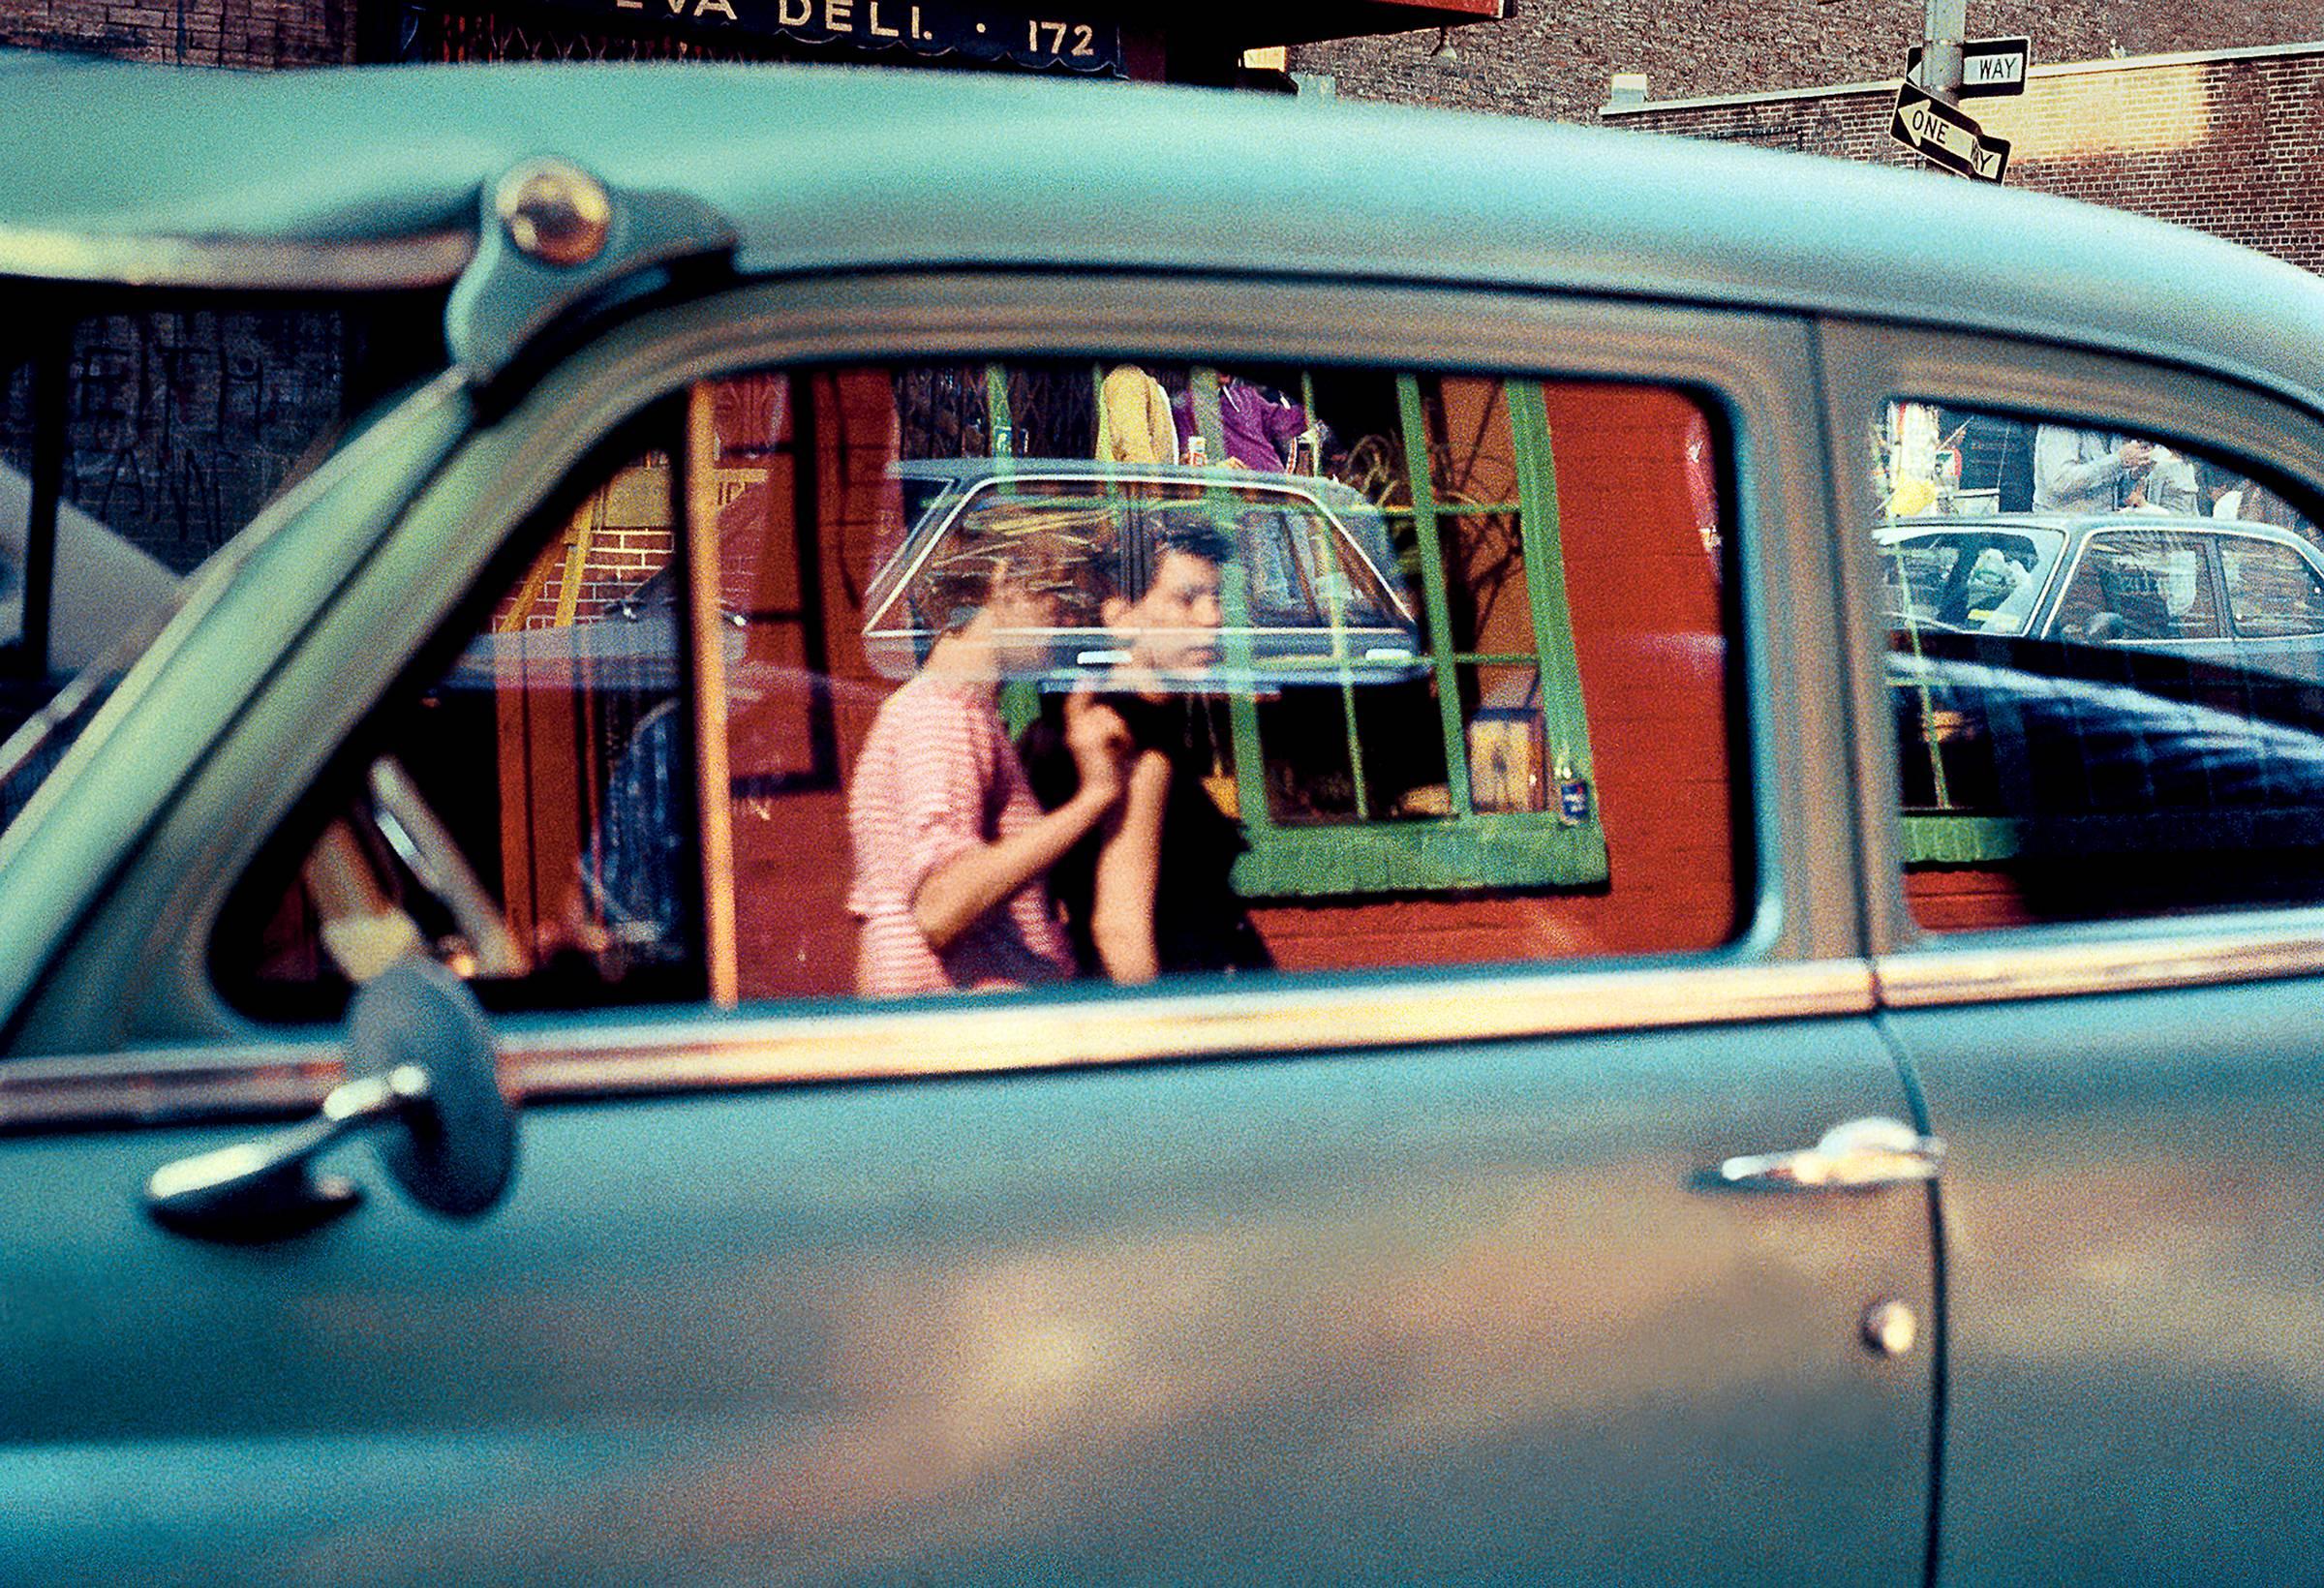 Robert Herman Color Photograph - Prince Street Photograph Soho, New York, 1981 (The New Yorkers) 